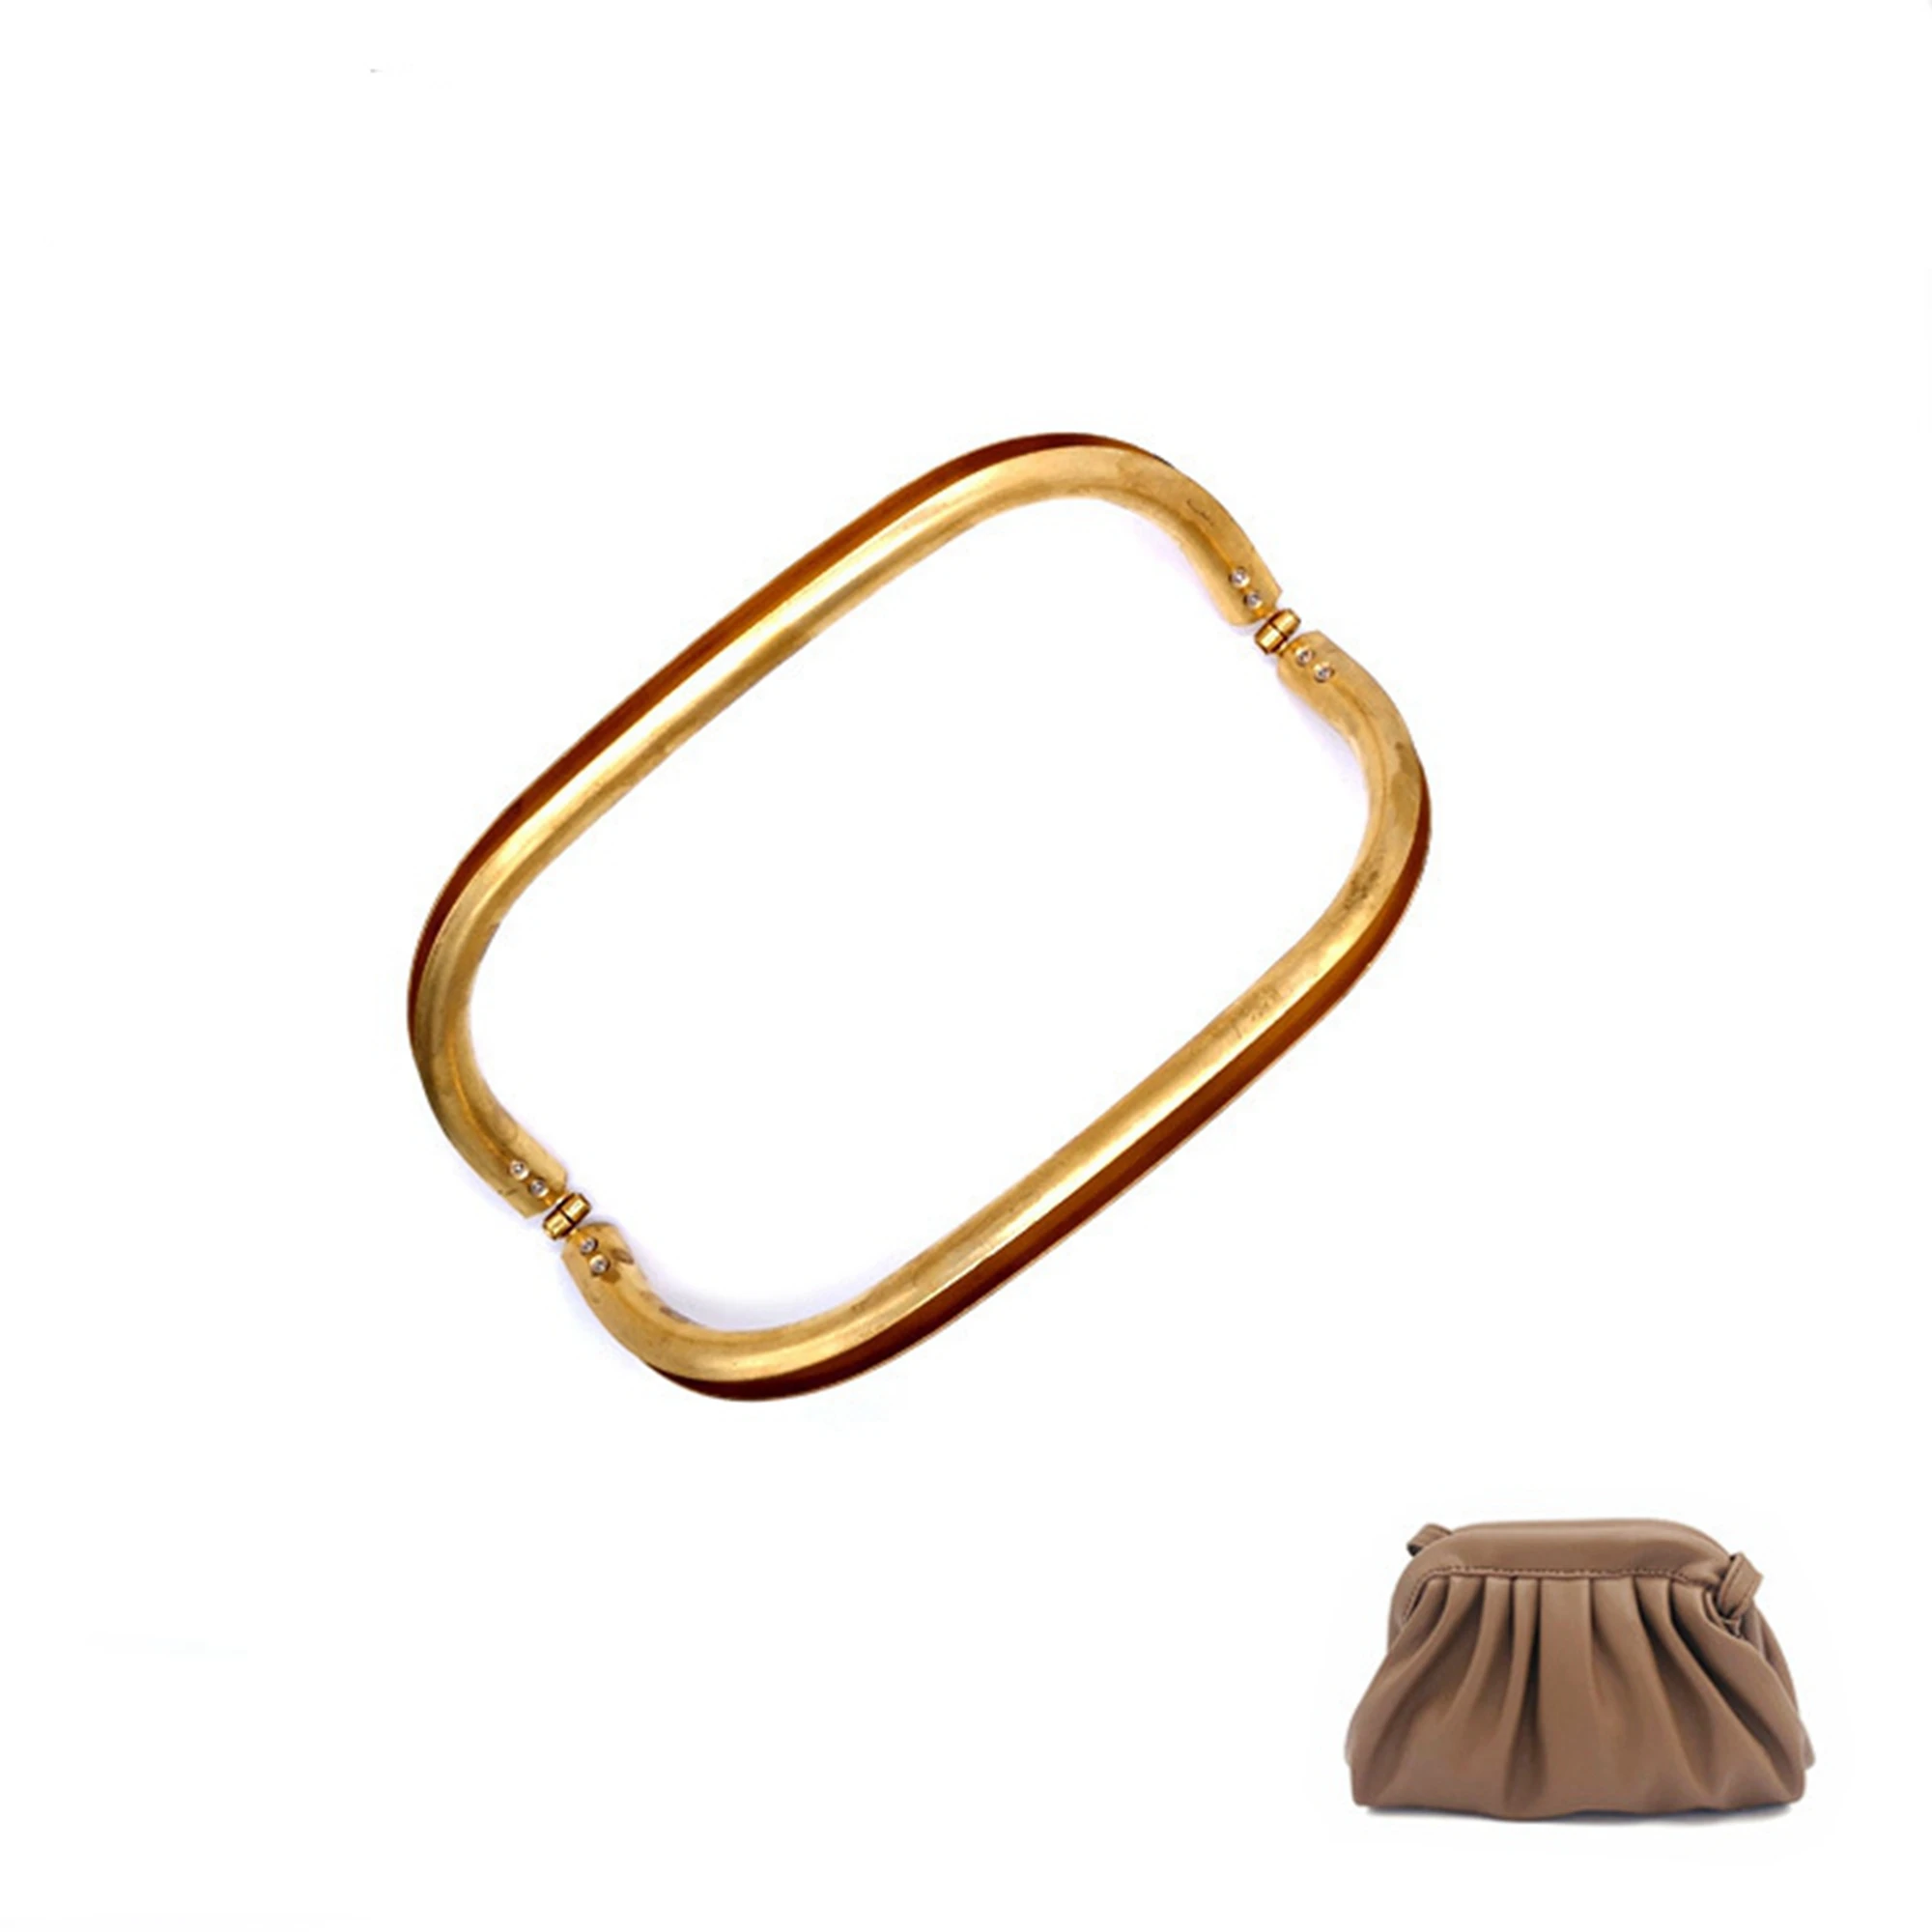 

High Quality Handbag Accessories Long Strong Metal Bag Internal Flex Frame, Gold